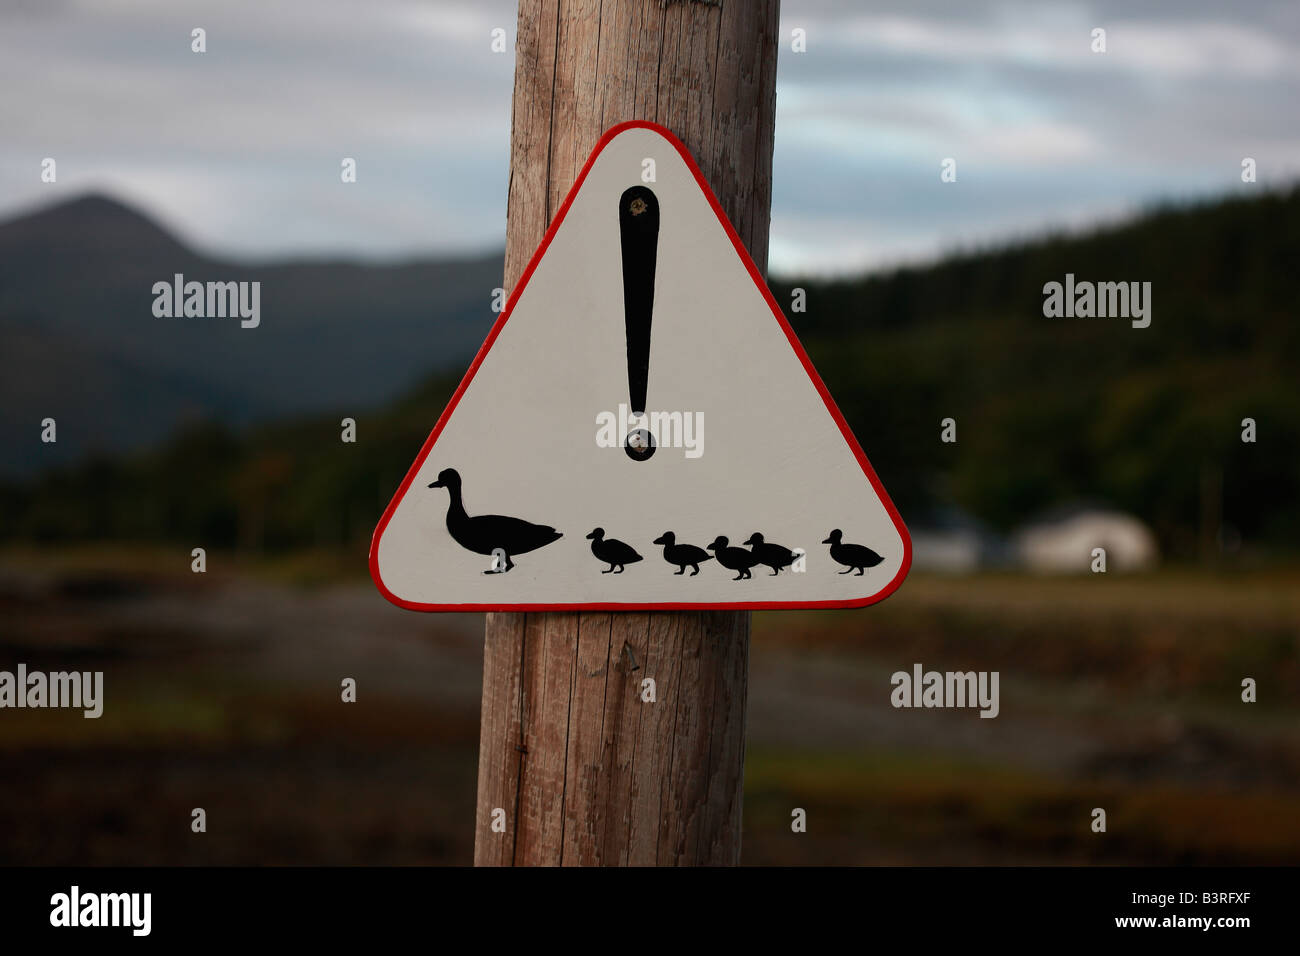 Road sign warning of ducks crossing Stock Photo